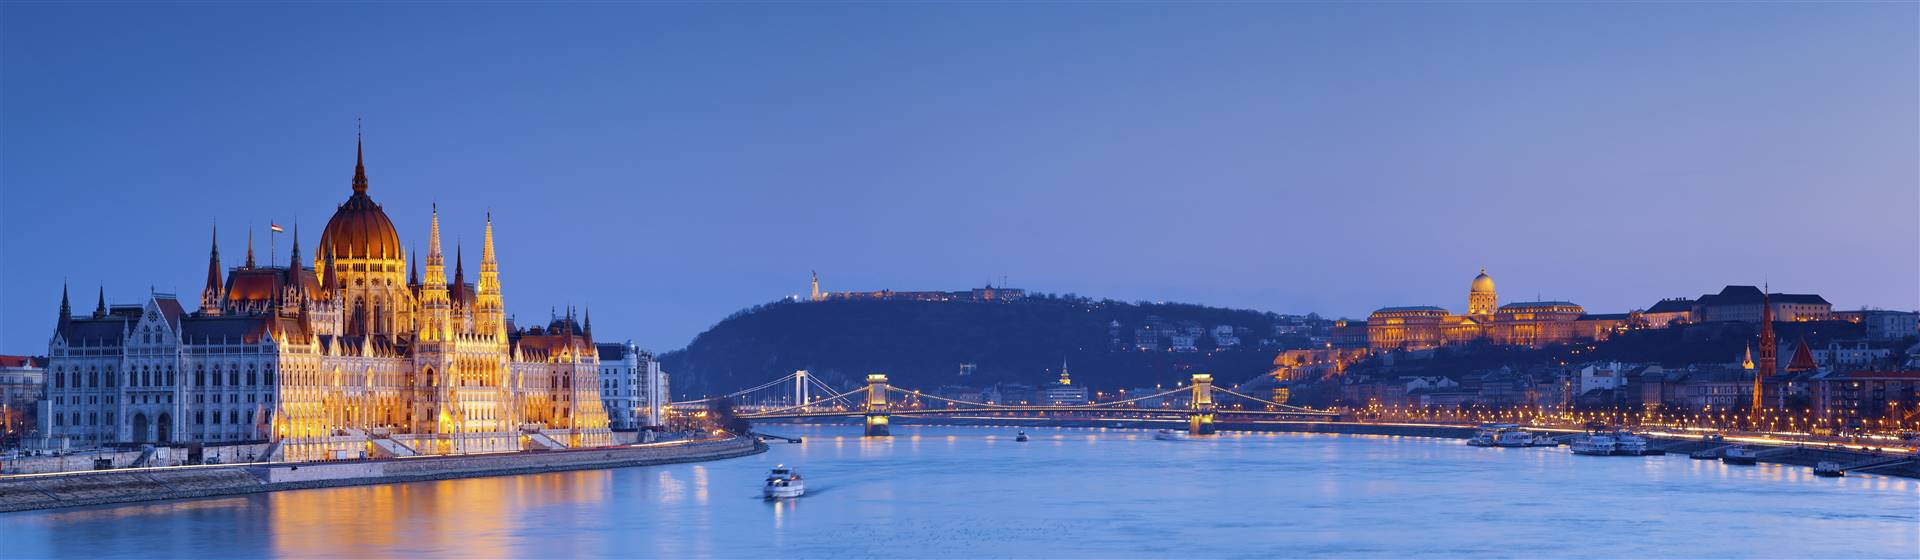 Cruise the Danube to Vienna & Budapest